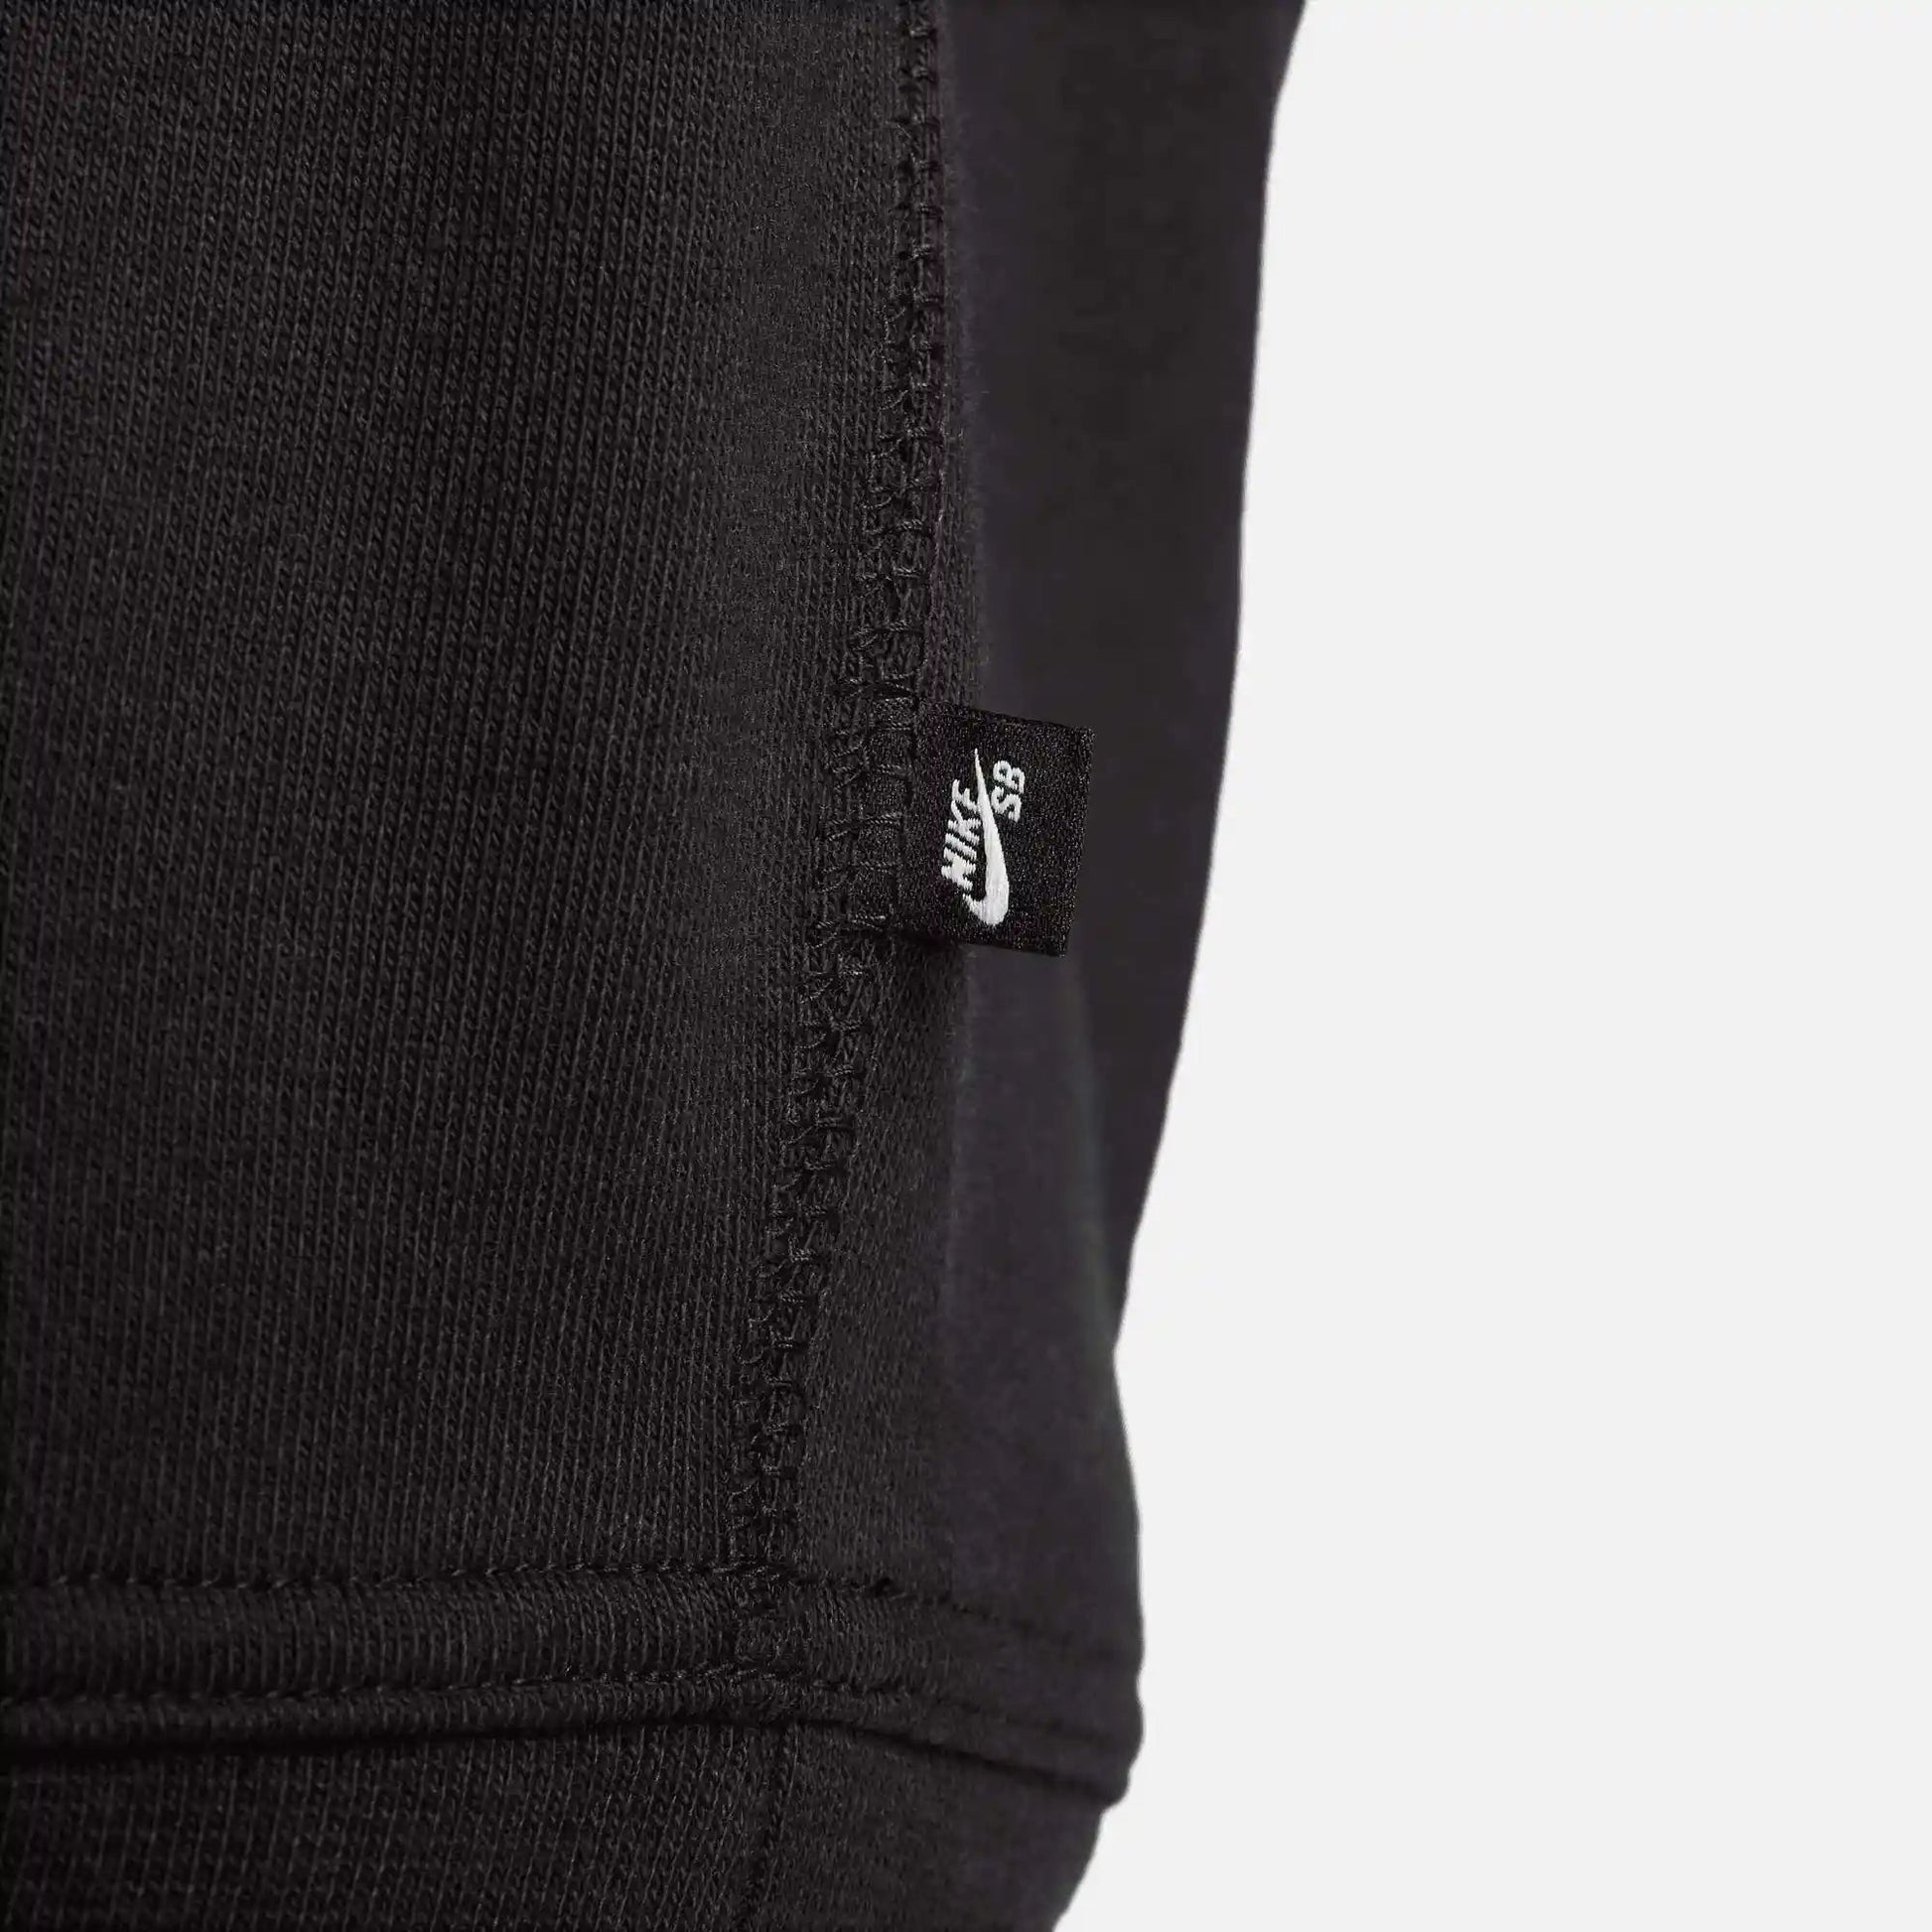 Nike SB Fleece Pullover Skate Hoodie, black/white - Tiki Room Skateboards - 10